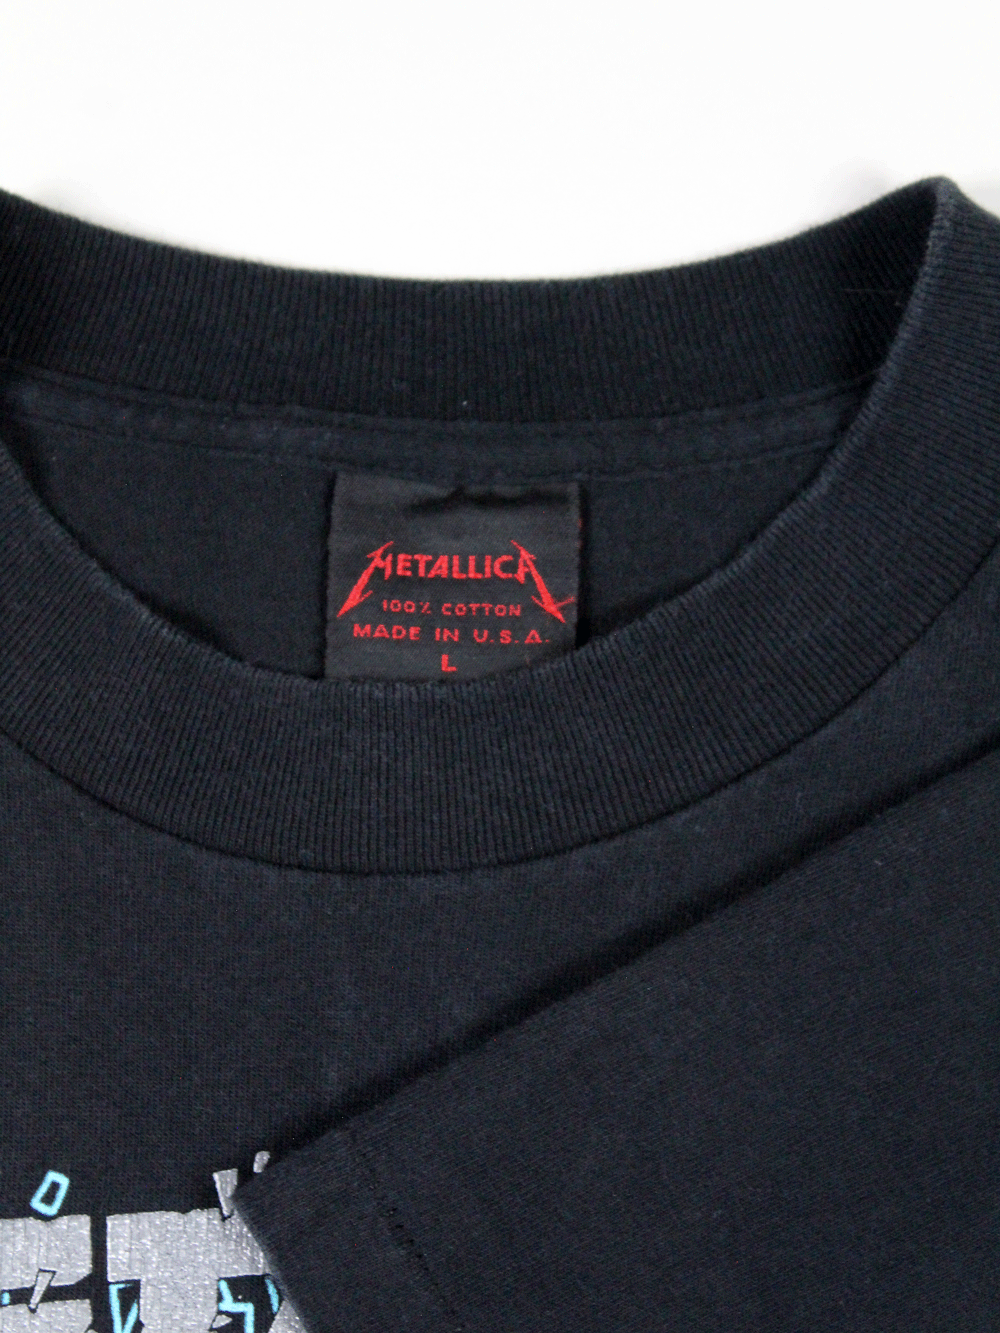 Metallica 1991 Vintage T-shirt